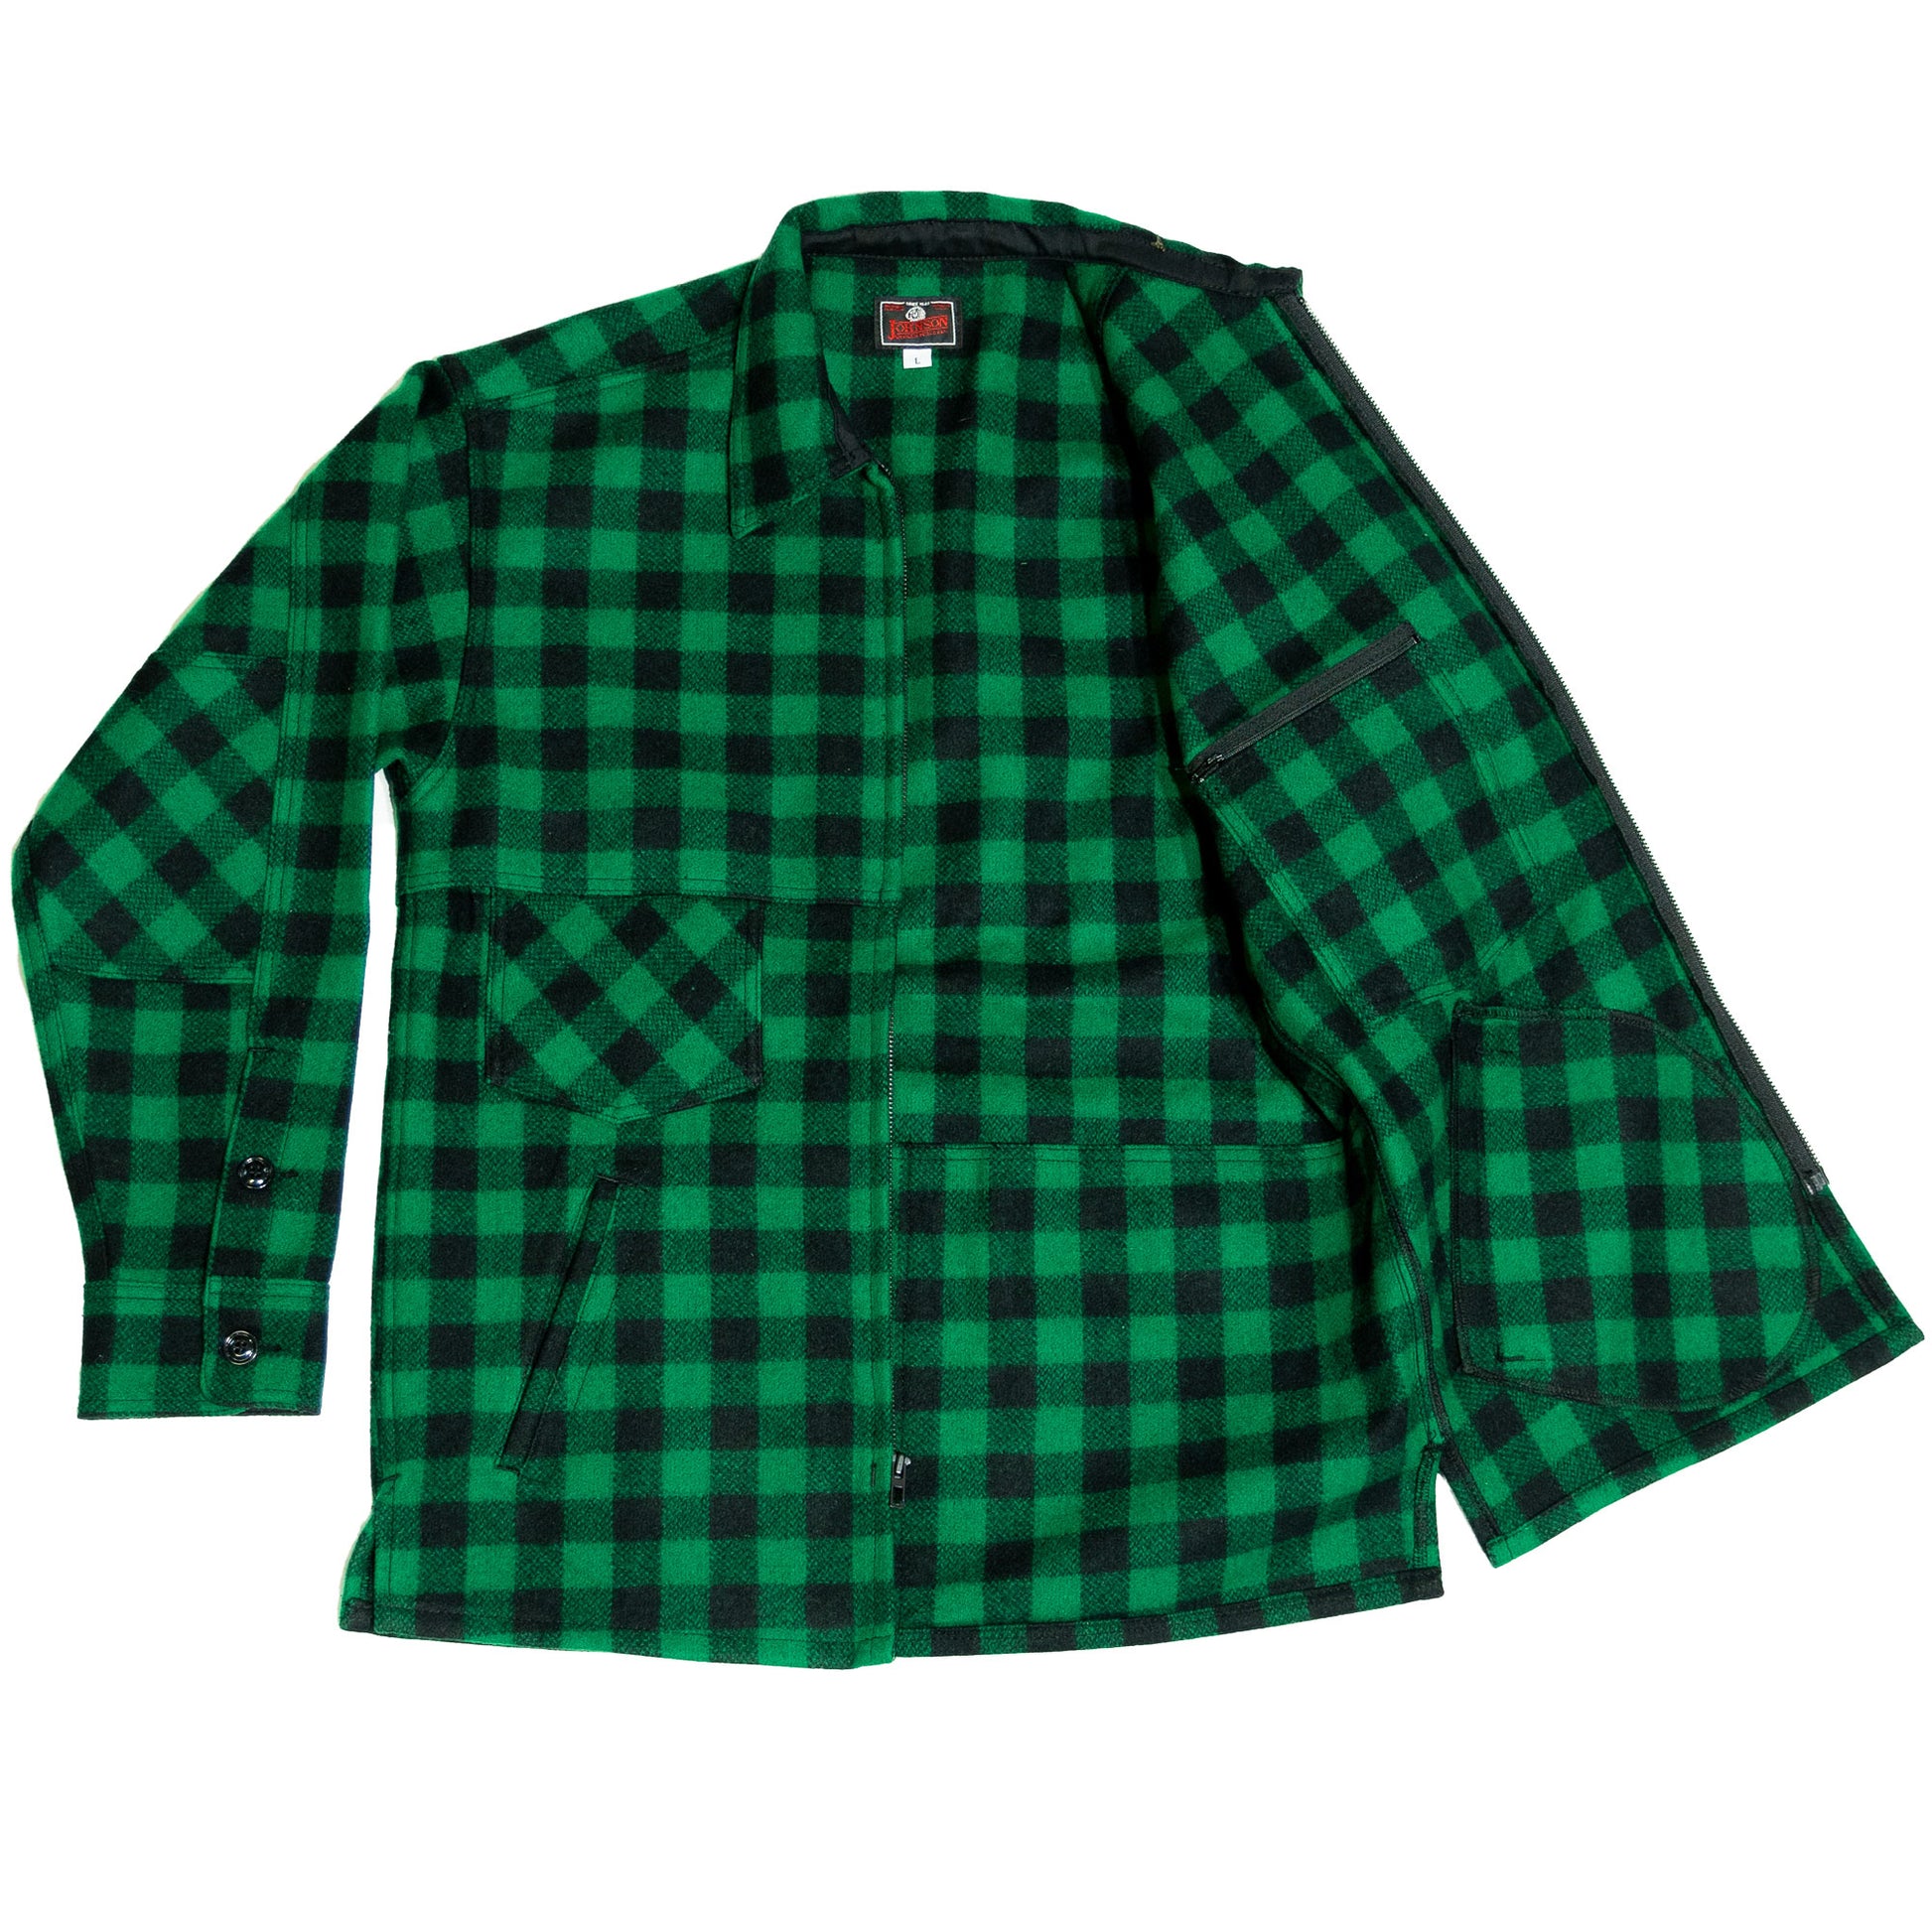 Johnson Woolen Mills northwoods x 1842 green and black buffalo check jac shirt opened up